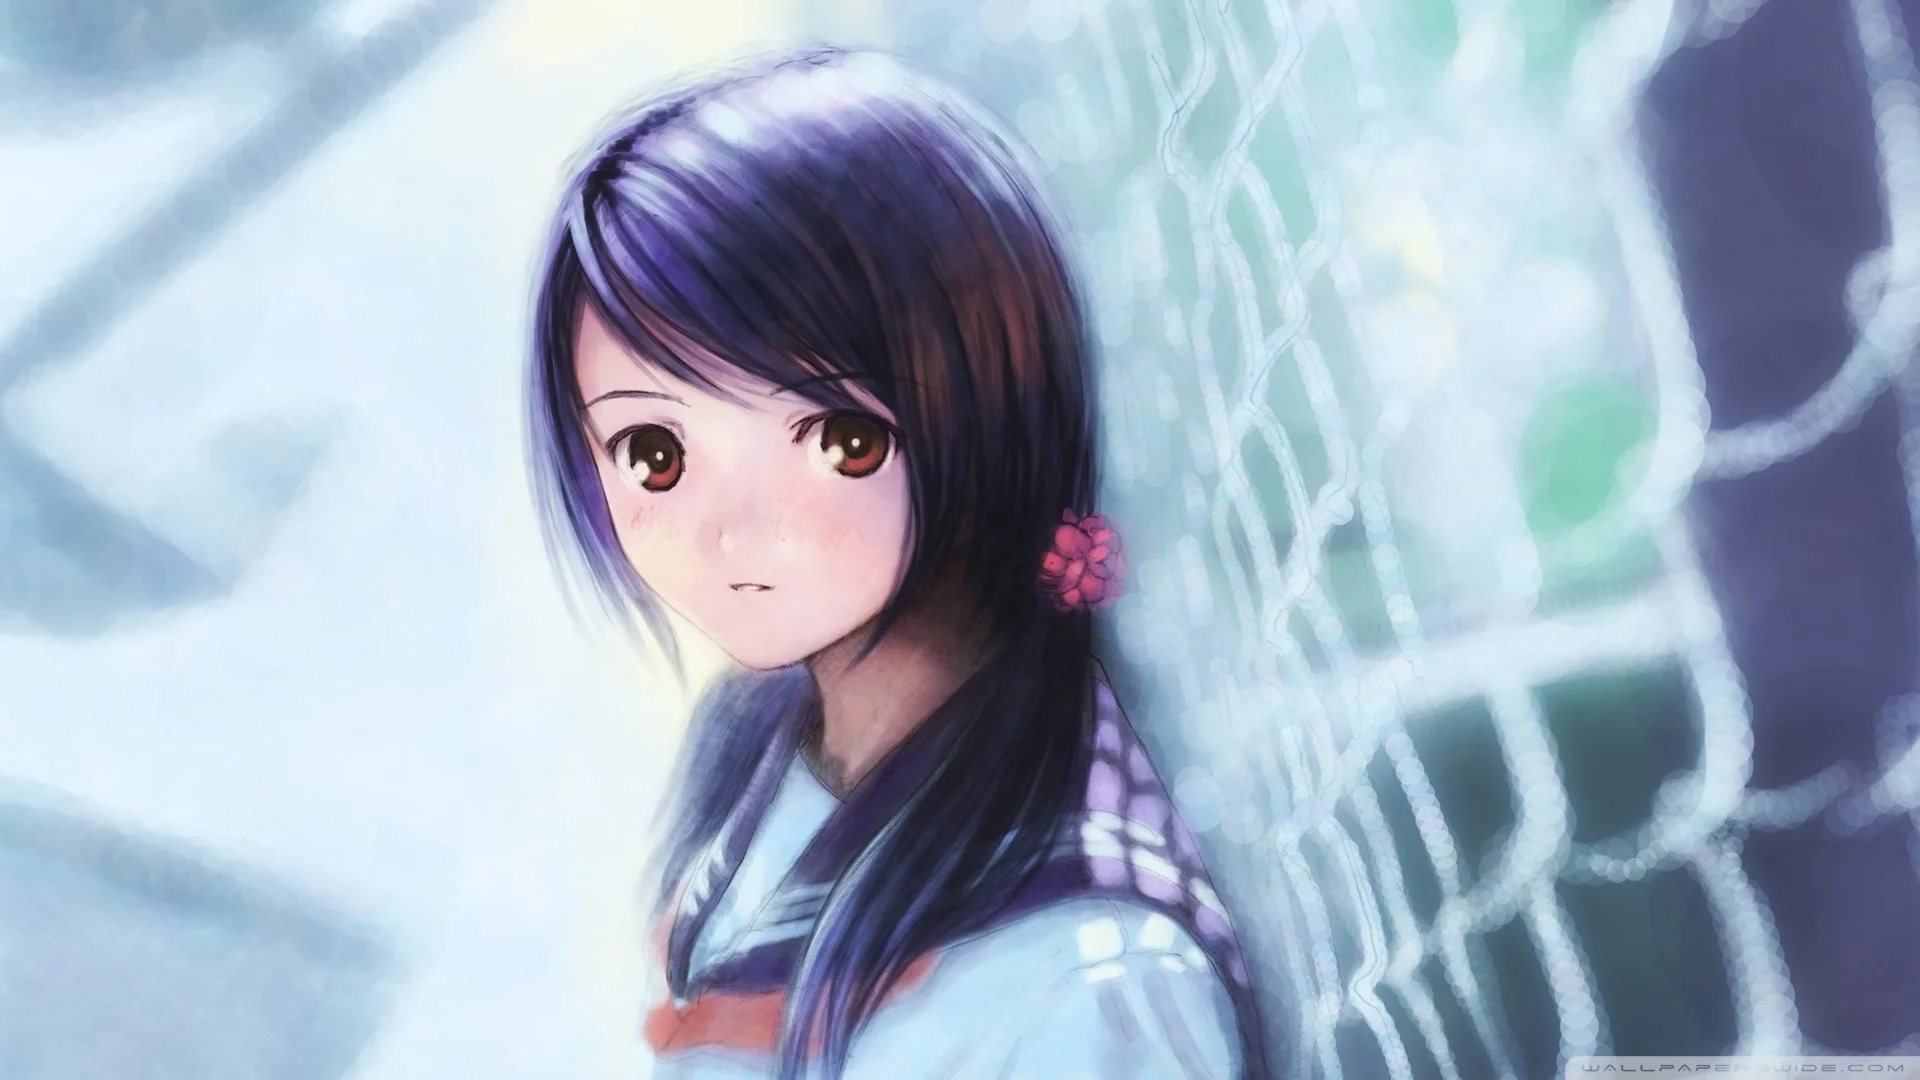 Anime Girl Wallpapers 4K Free download  PixelsTalkNet